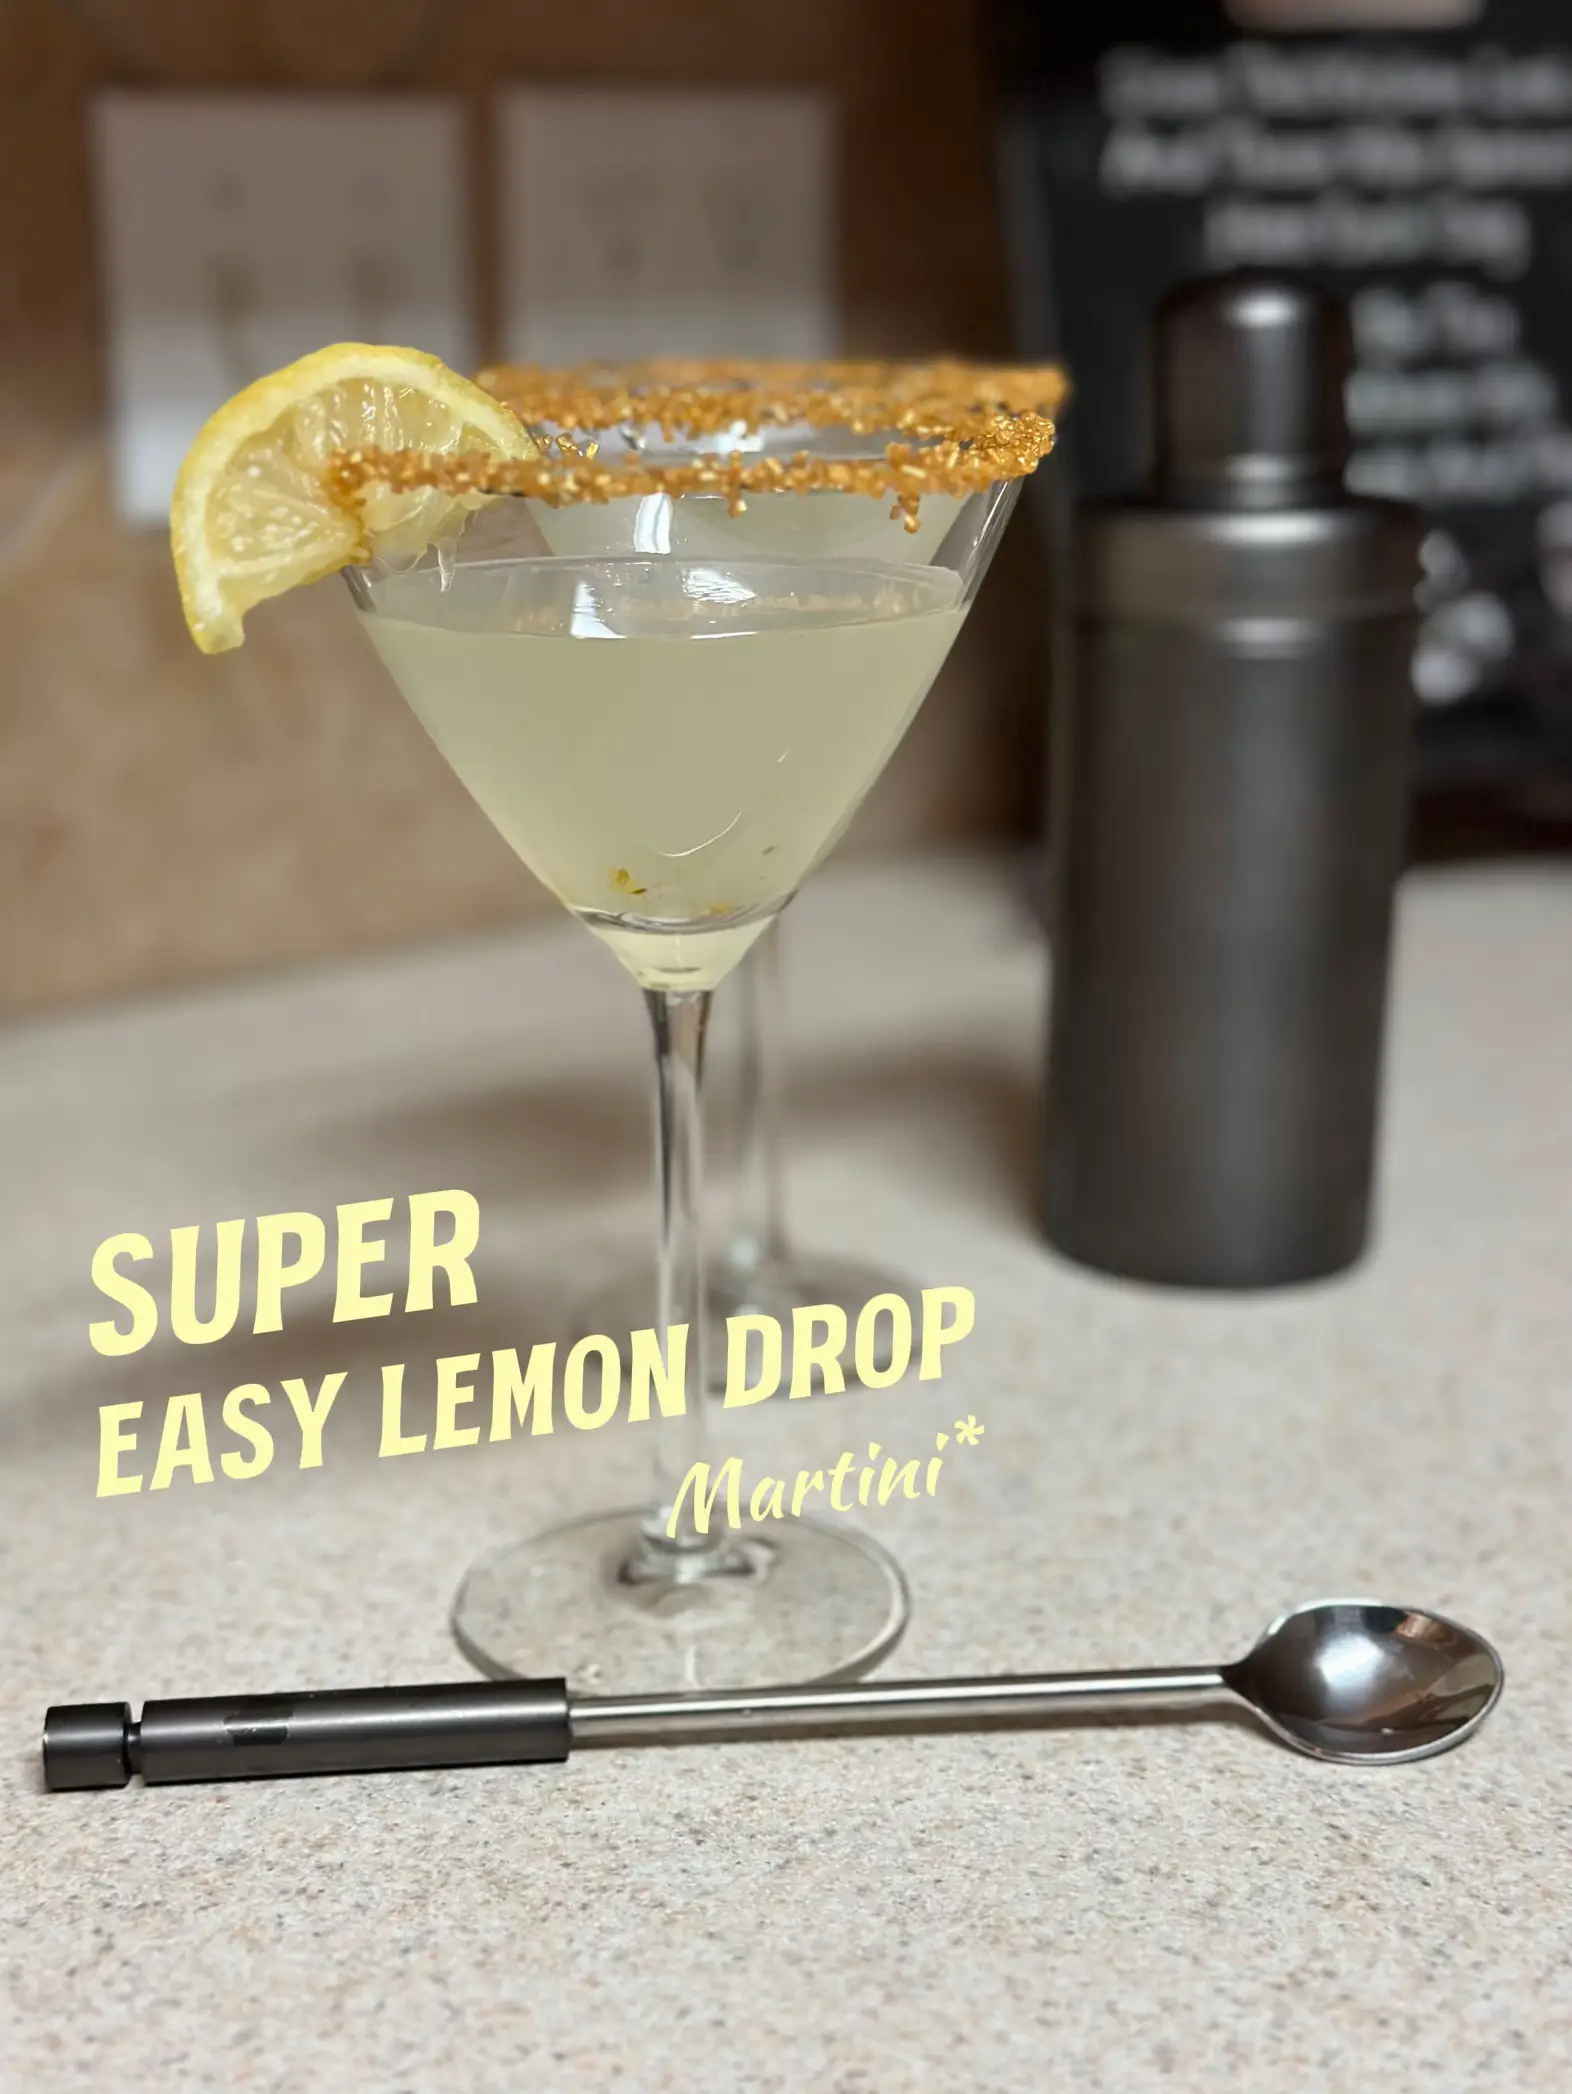 EASY lemon drop martini 's images